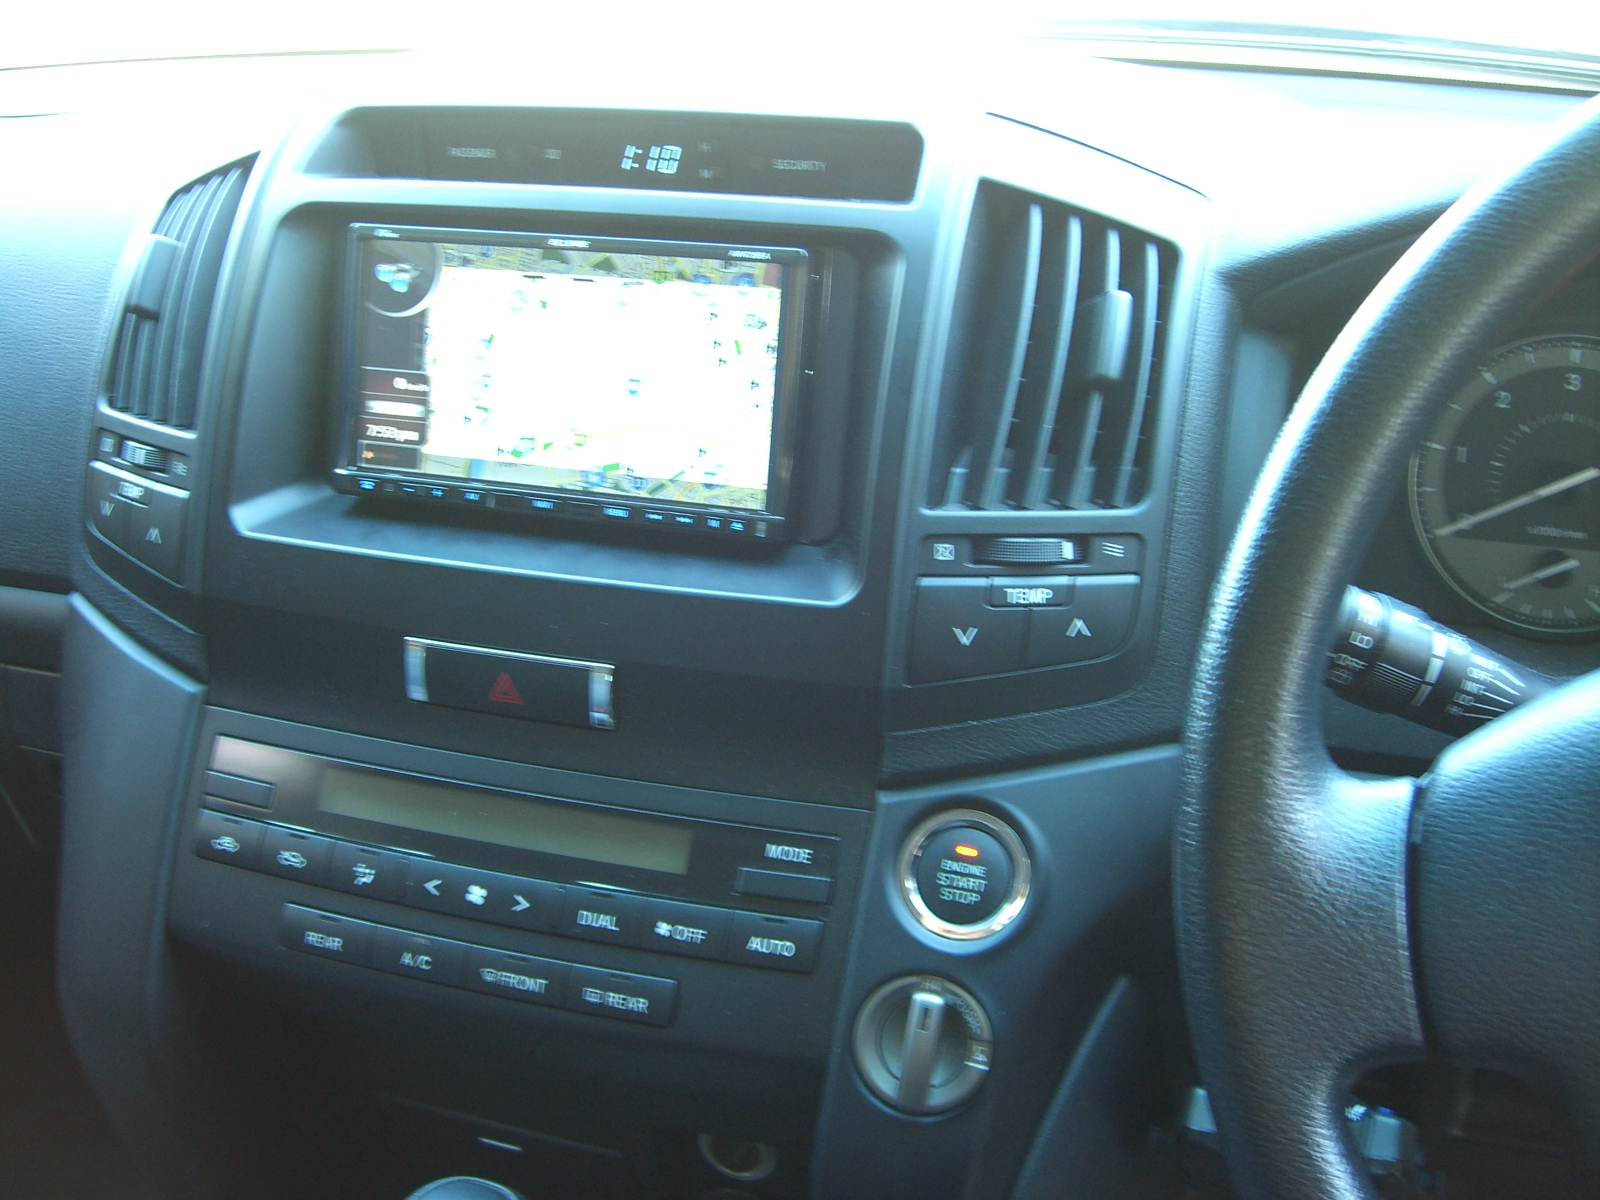 Toyota Landcrusier 200 Series, GPS Navigaiton, iPod, iPhone, Bluetooth Handsfree